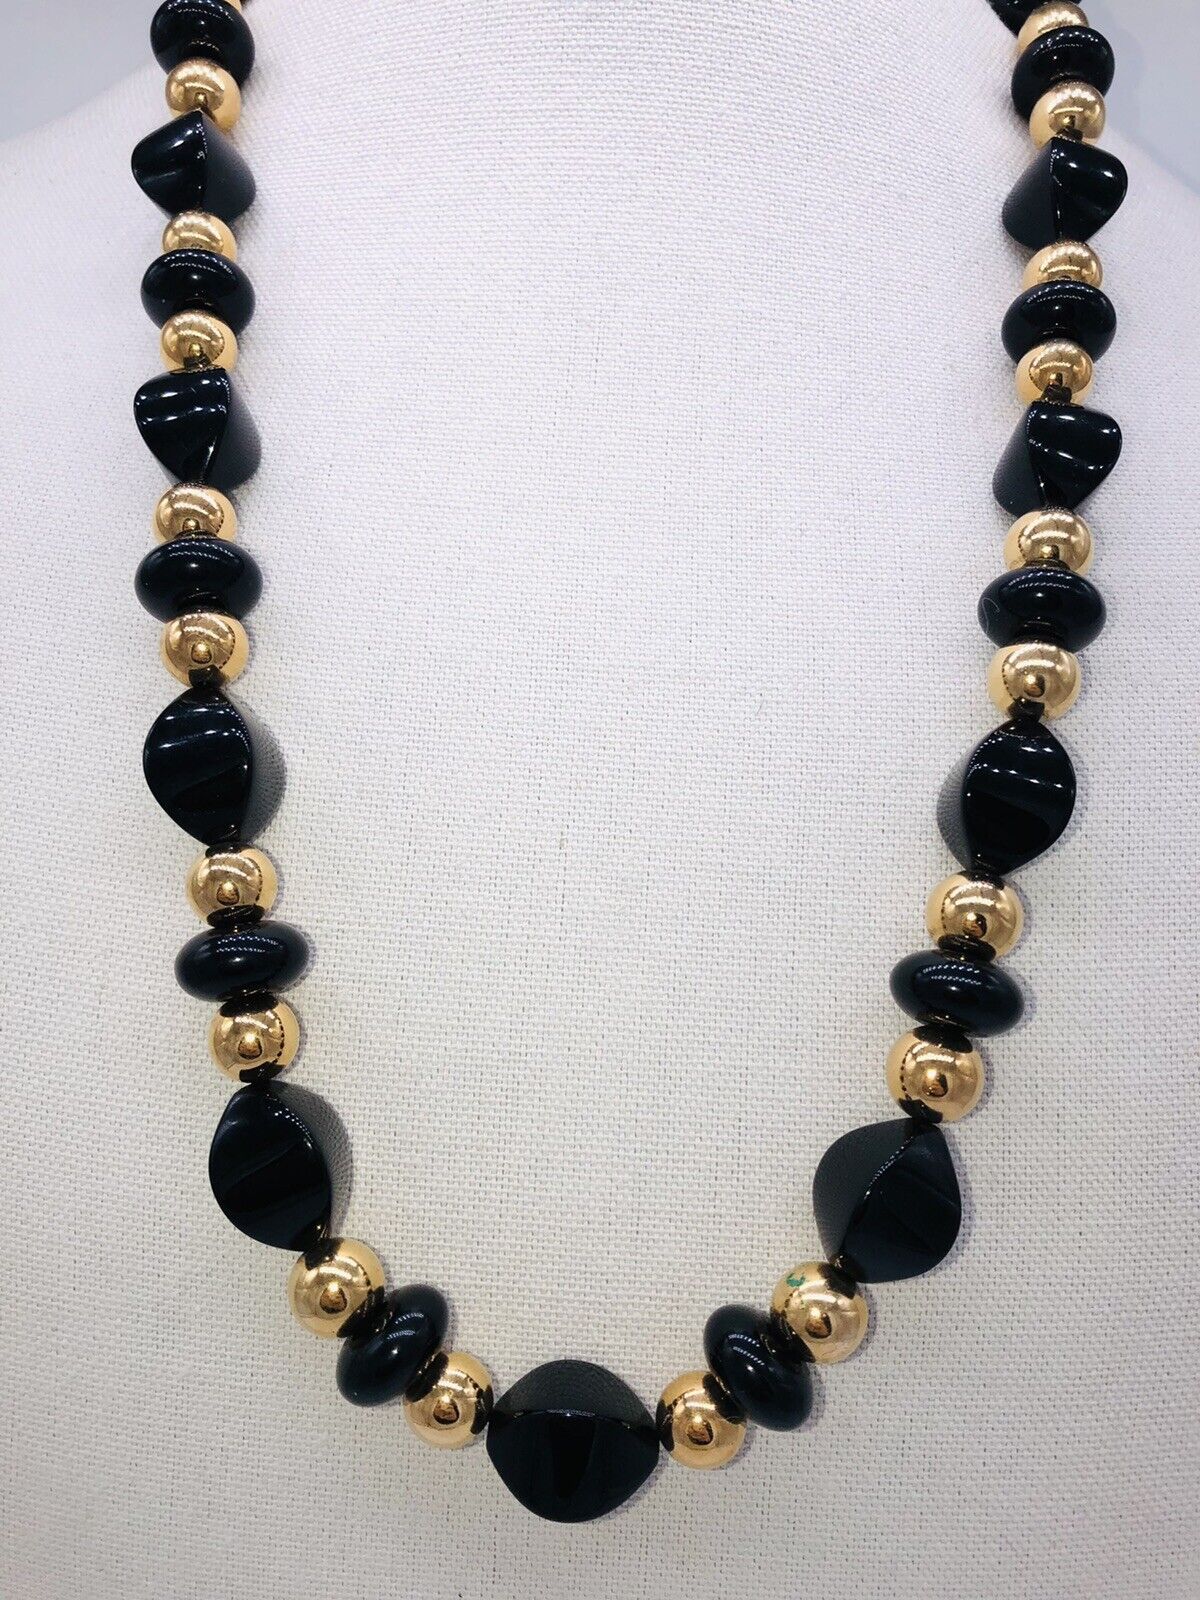 Vintage Napier Black and Goldtone Bead Necklace